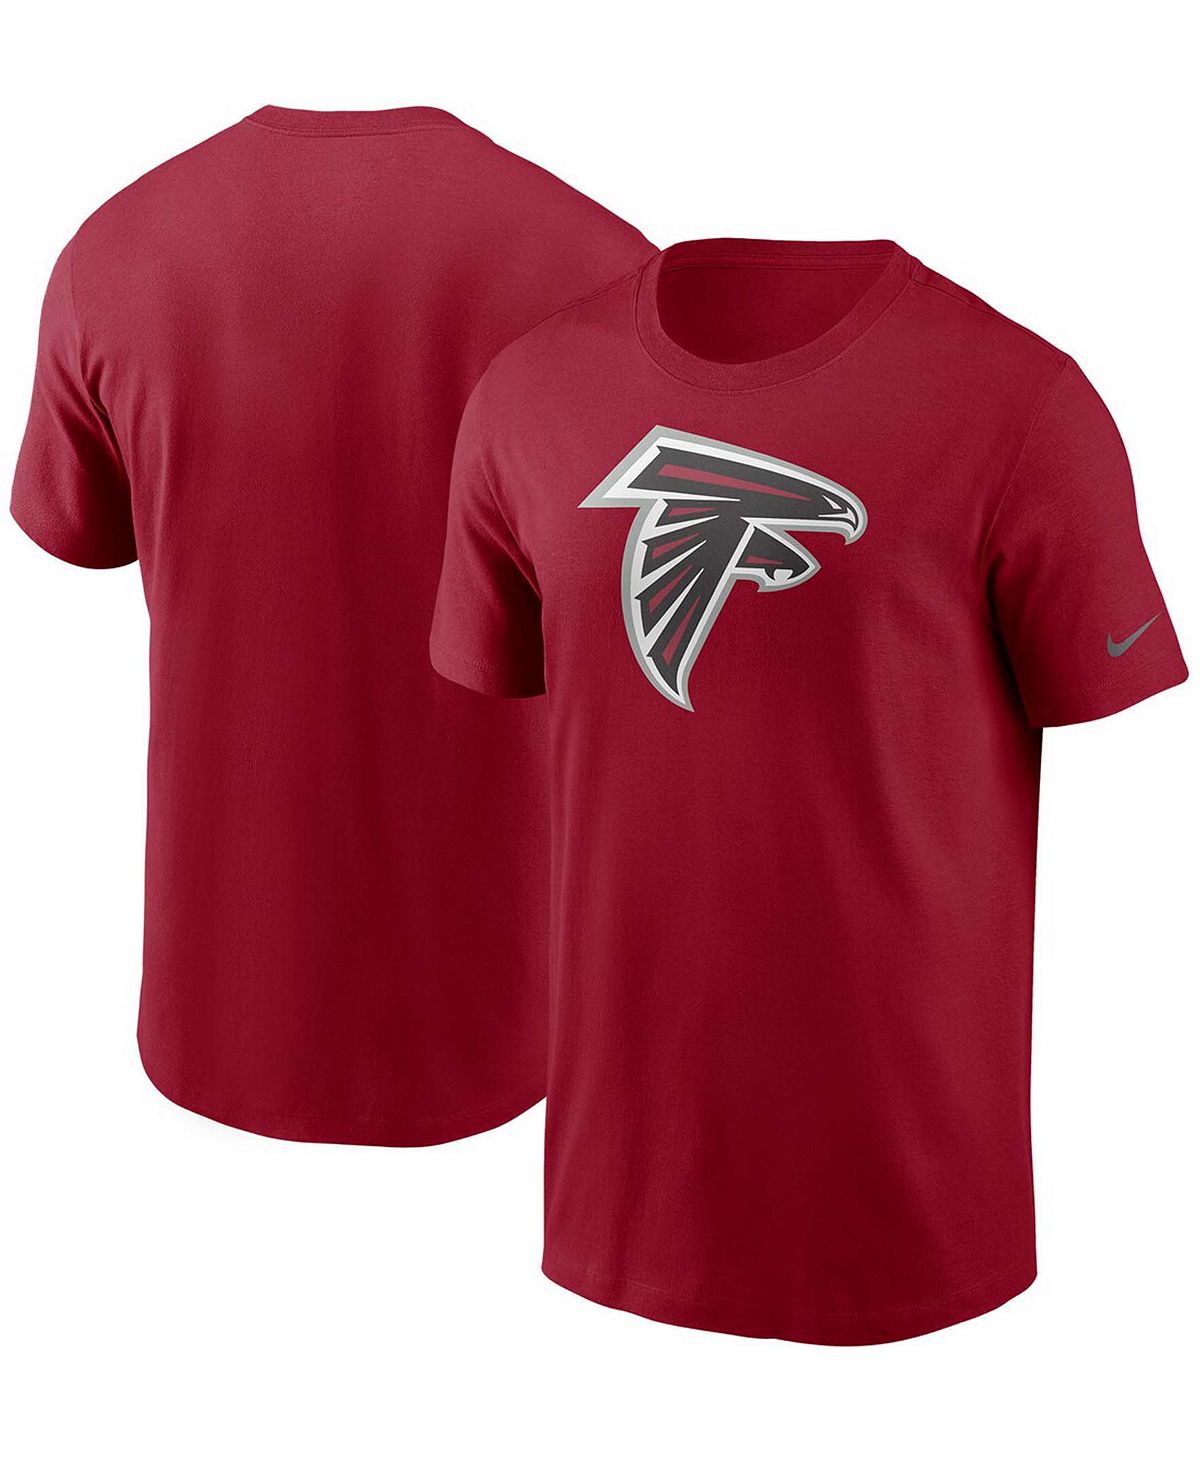 Мужская красная футболка с логотипом Atlanta Falcons Primary Nike